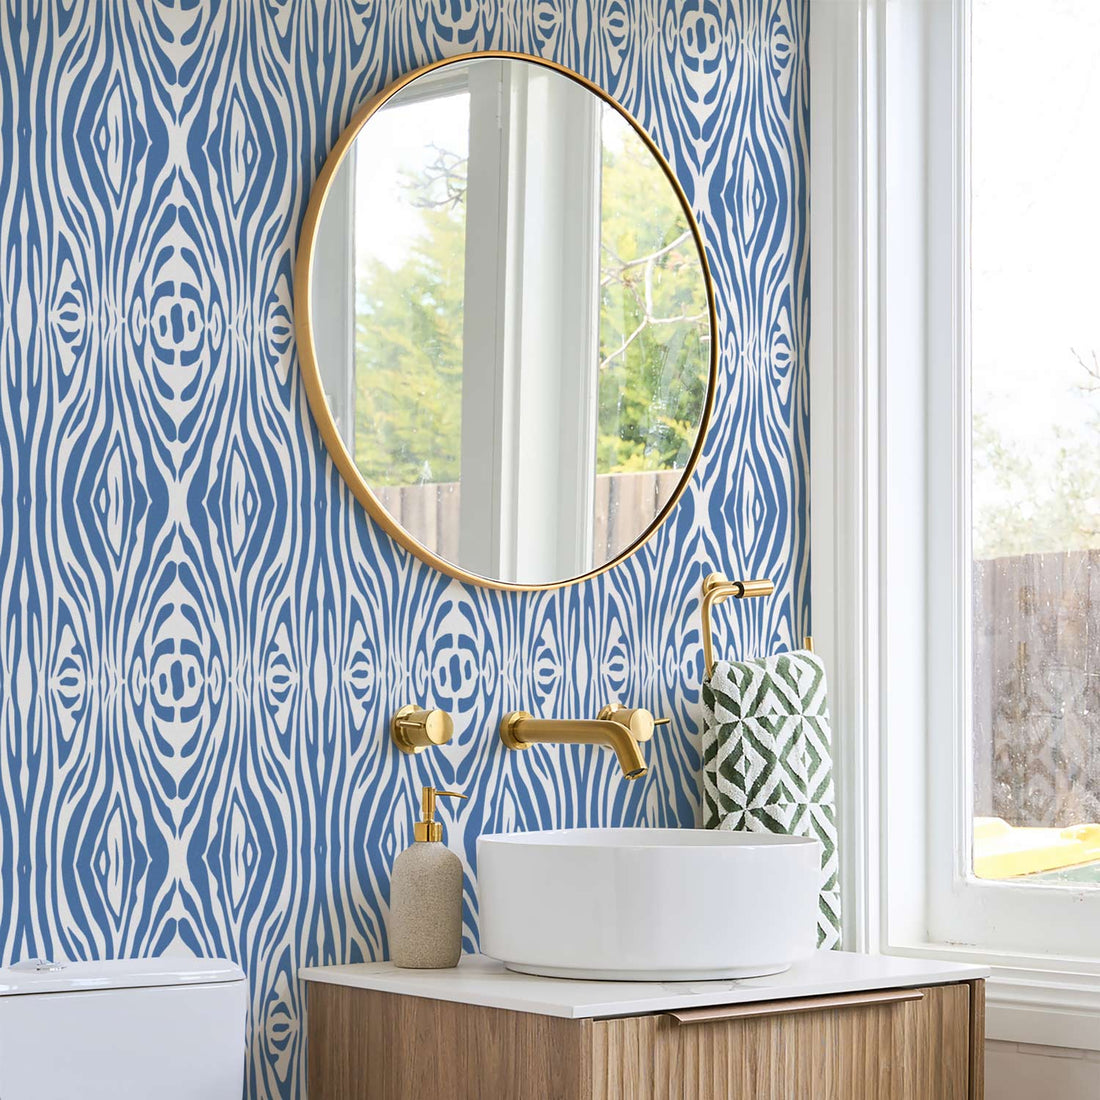 wild blue tiger pattern wallpaper for coastal bathroom